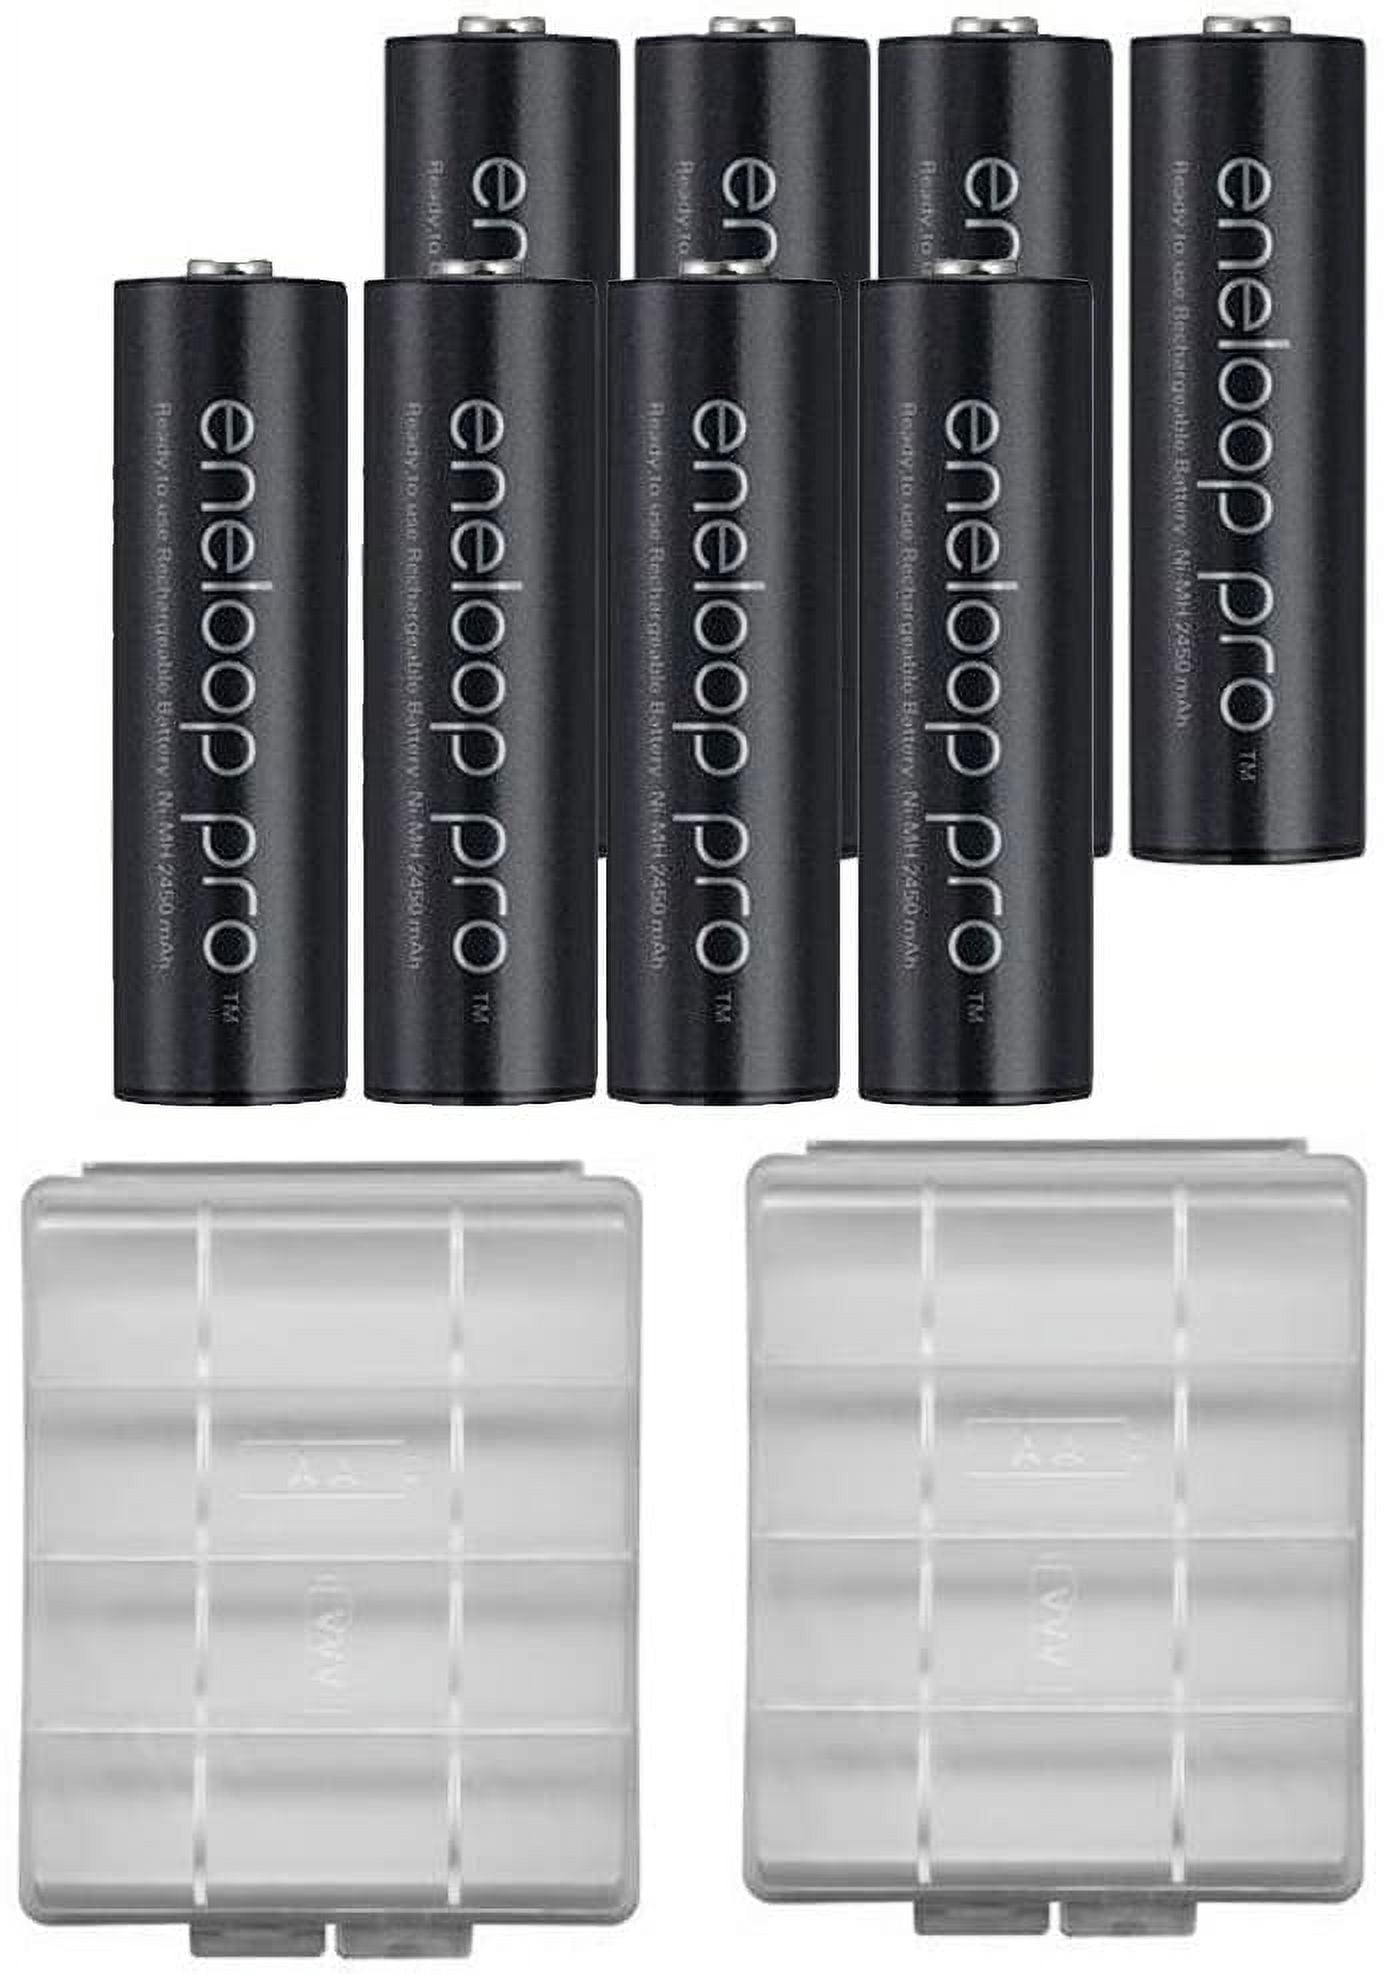 Panasonic eneloop Quick Individual Battery Charger and 4 AA Batteries Kit  White K-KJ55MCA4BA - PACK - Best Buy